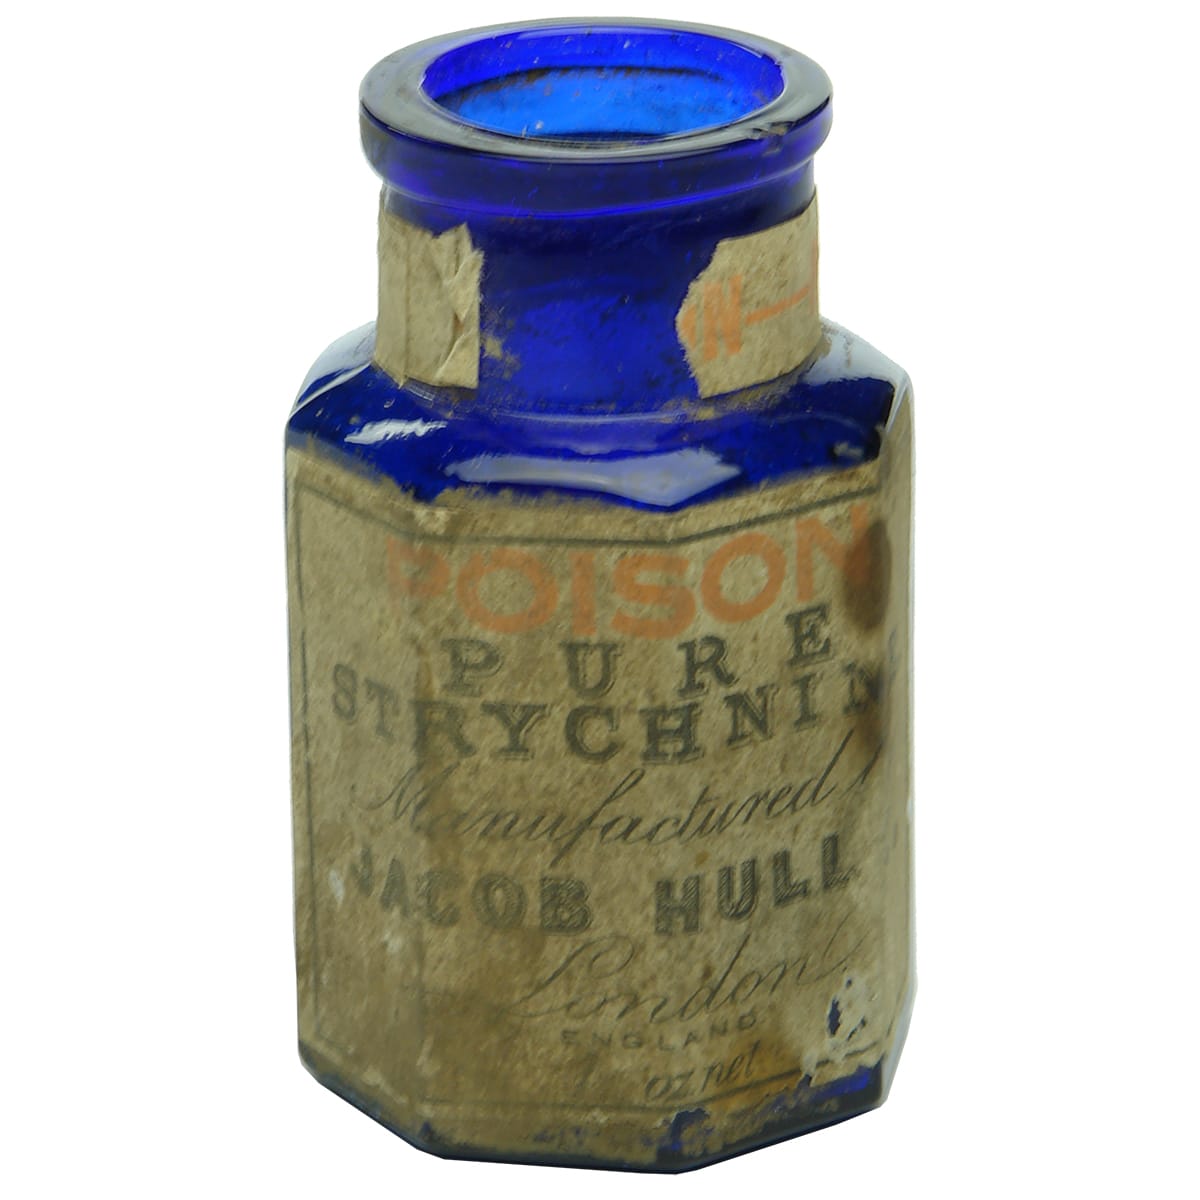 Poison. Jacob Hulle, Strychnine. Blue. Labels.